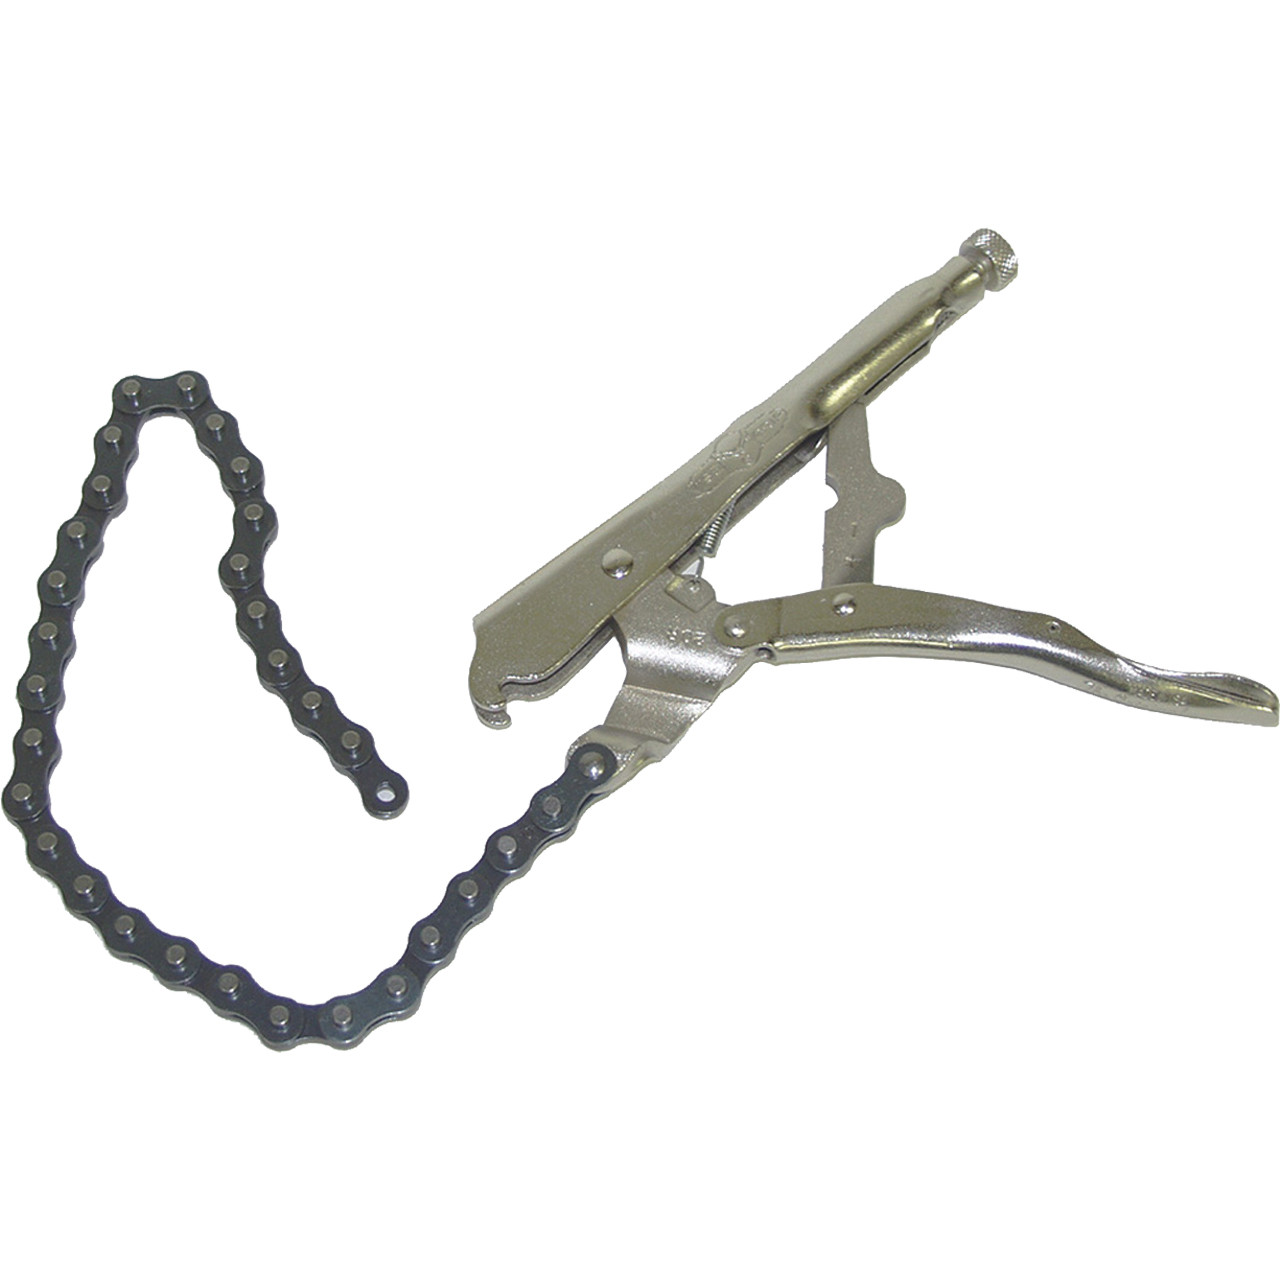 IRWIN Vise-Grips - 9 The Original Locking Welding Clamp Pliers